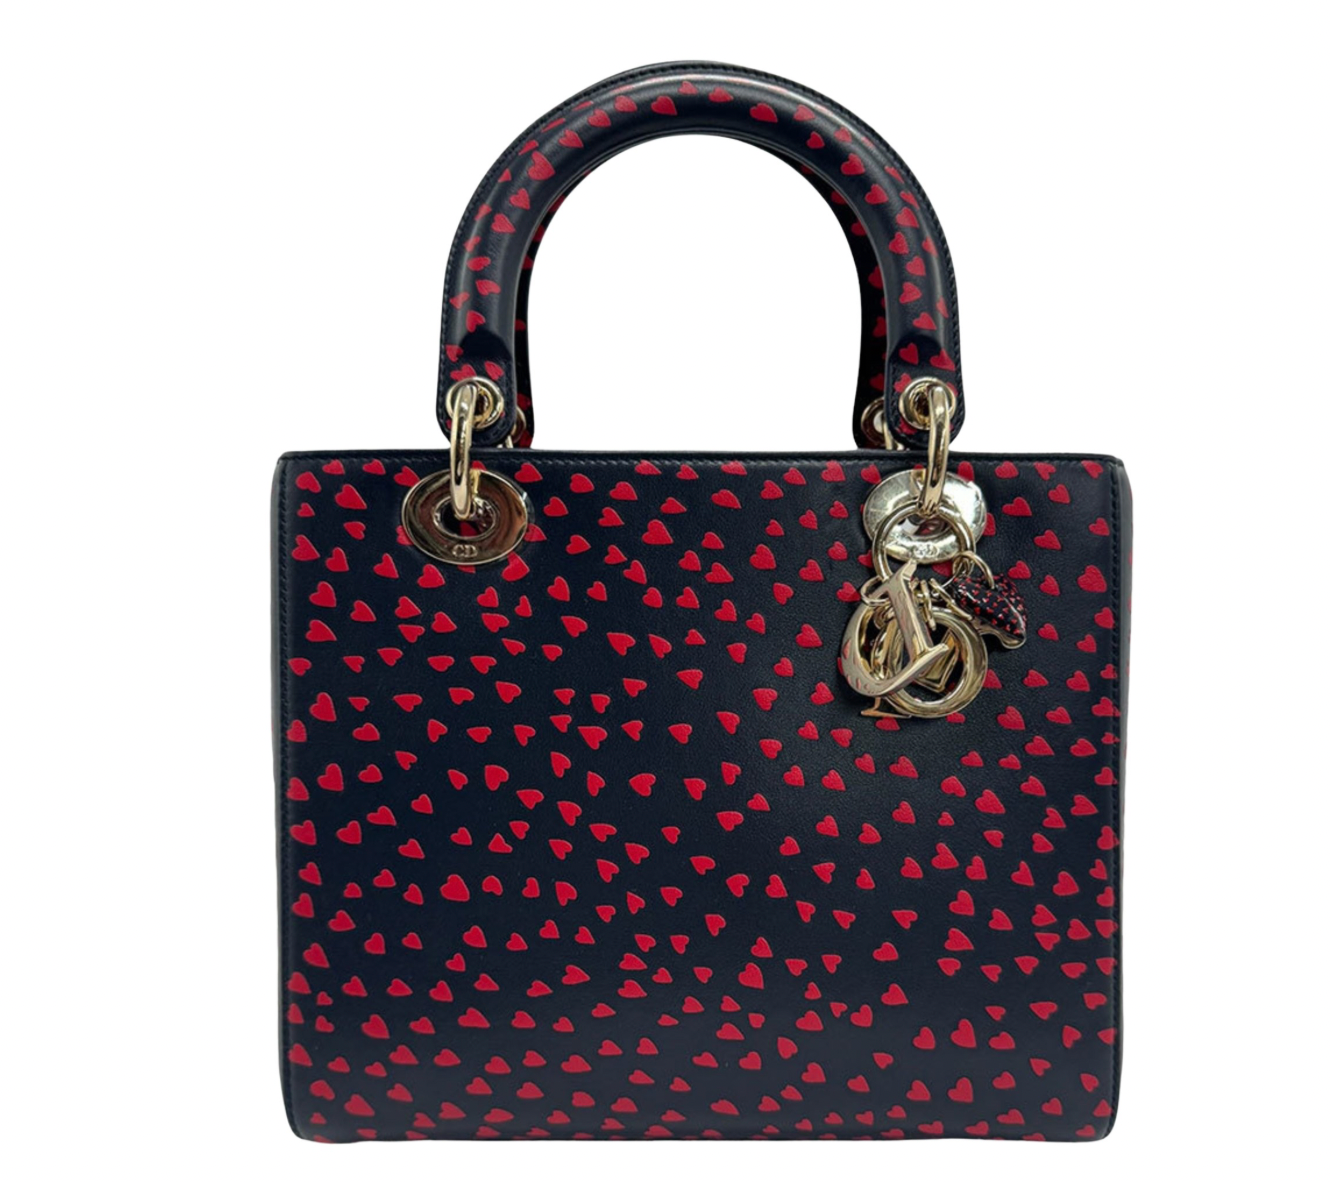 Pre-owned Limited edition 2021 Dior I Love Paris Medium Lady Dior handbag with a long strap